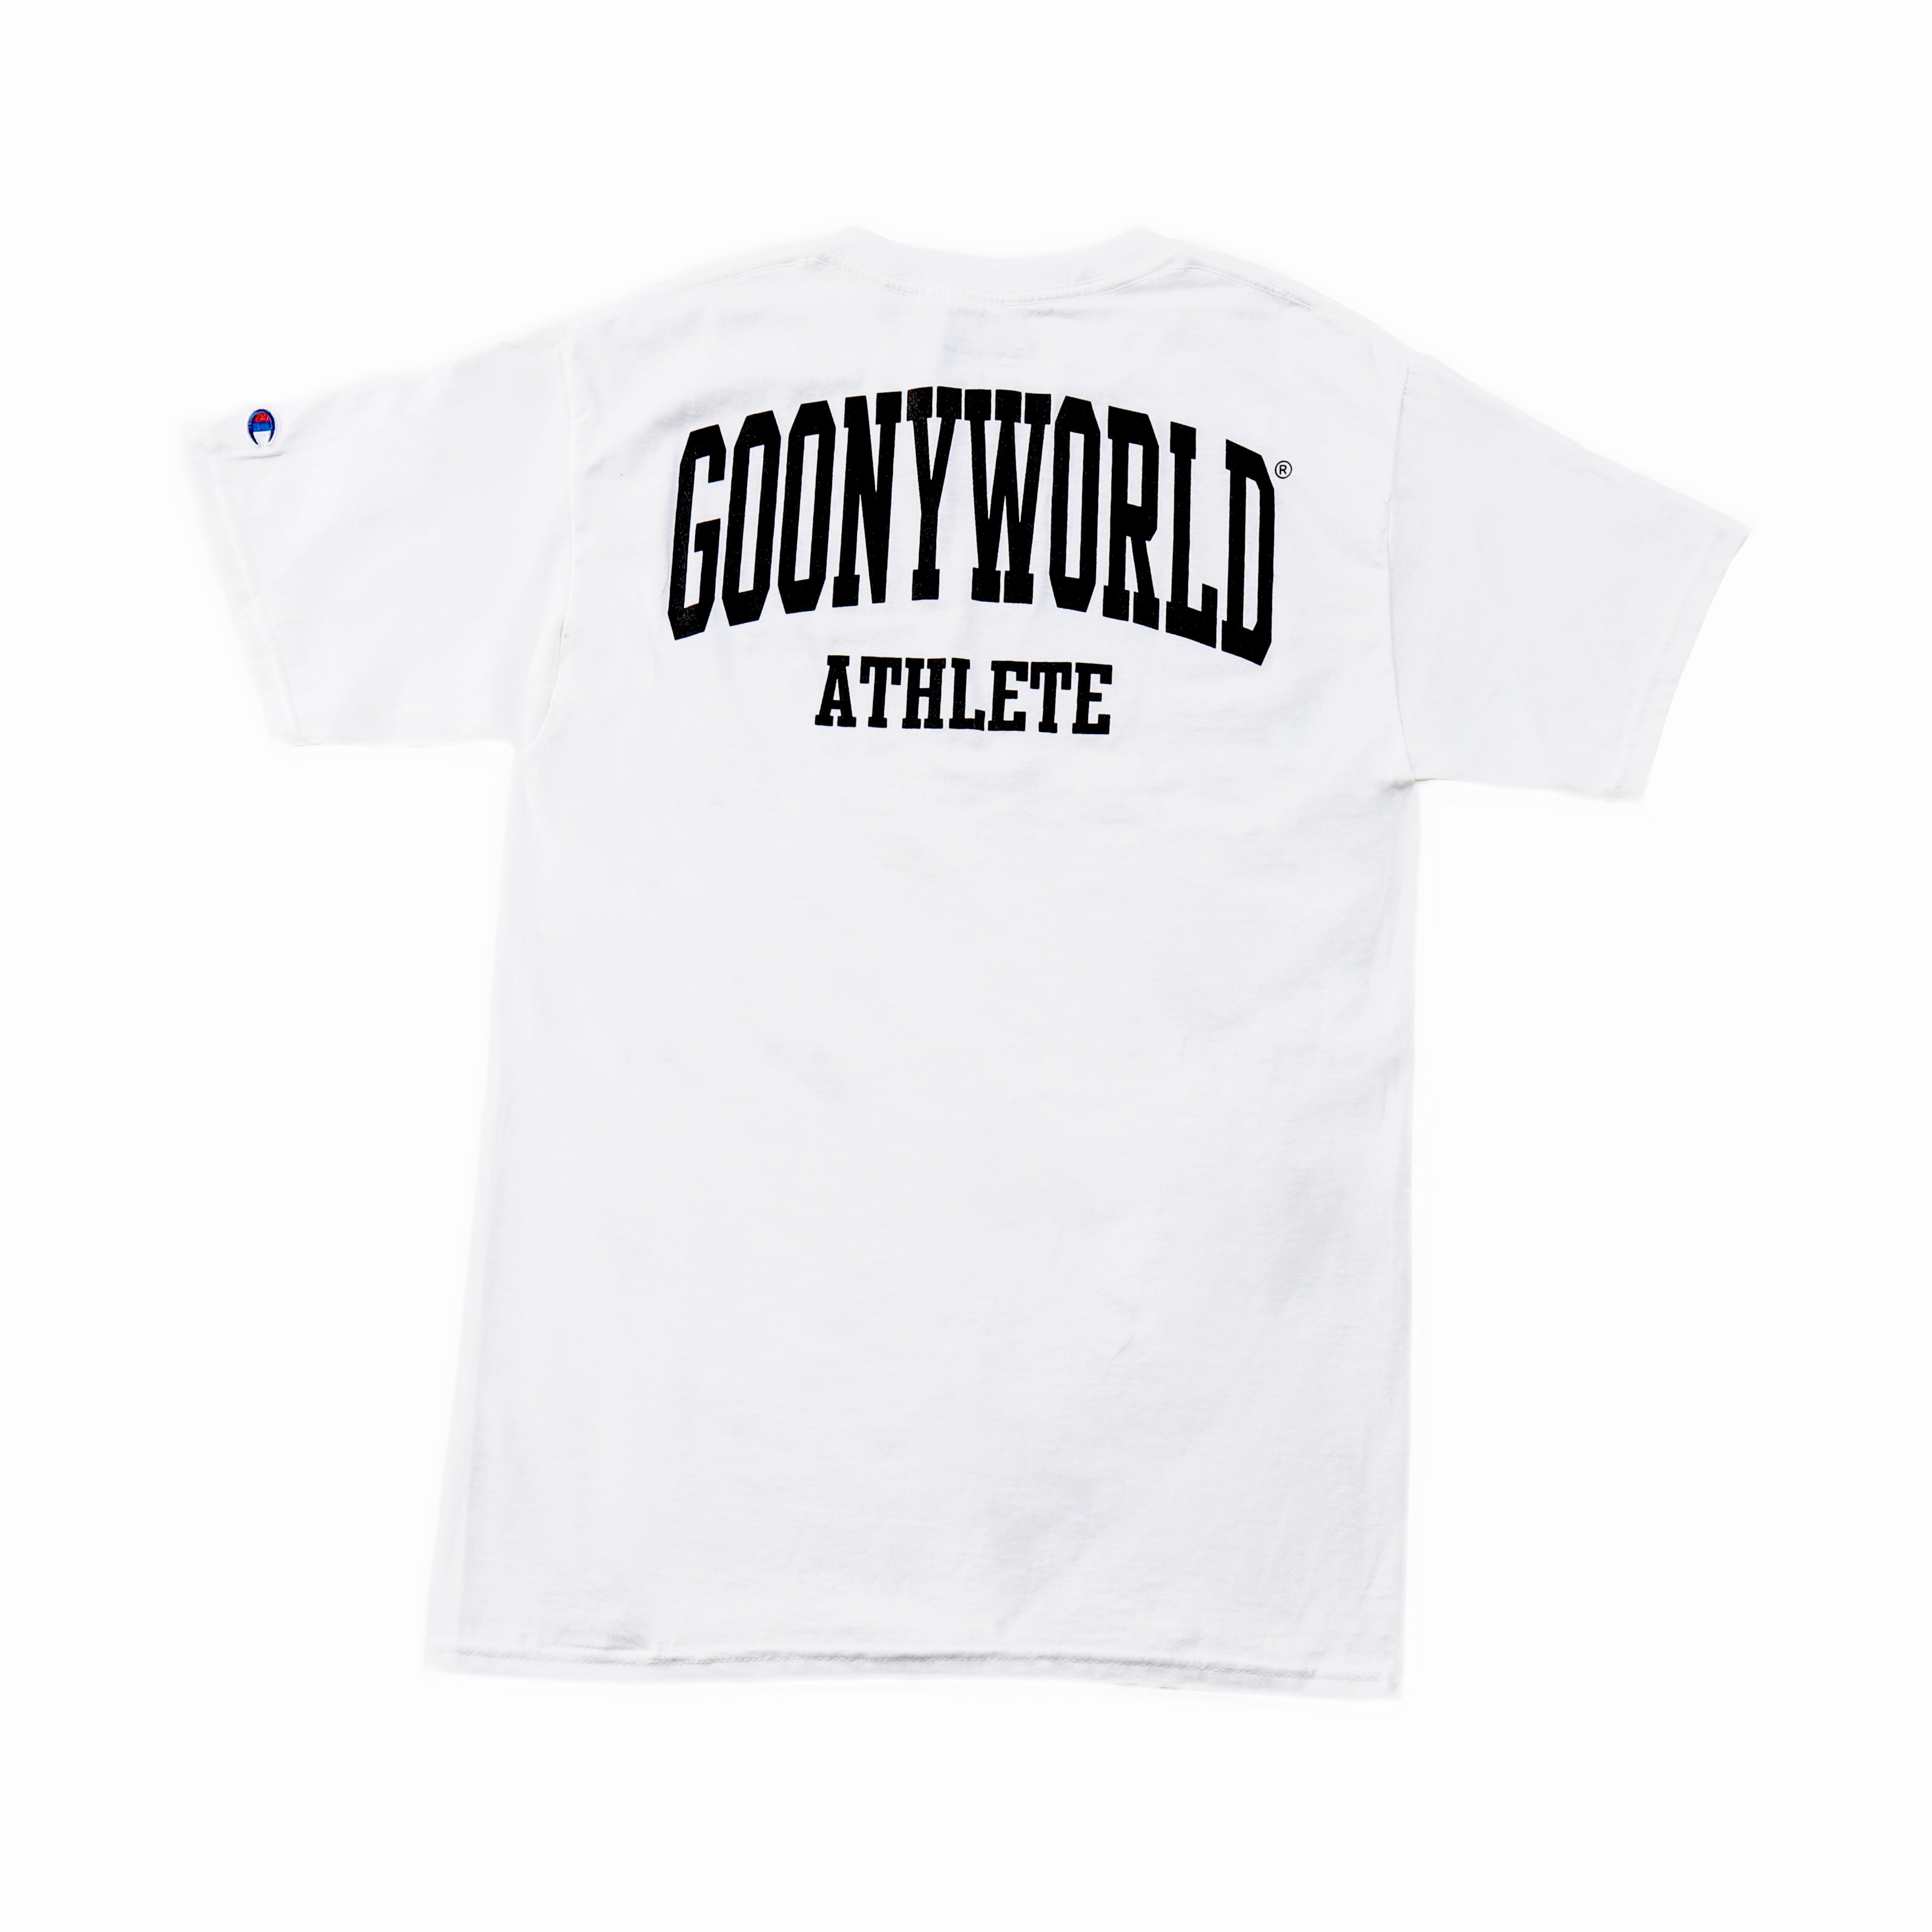 GOONYWORLD® ATHLETE T-SHIRT WHITE